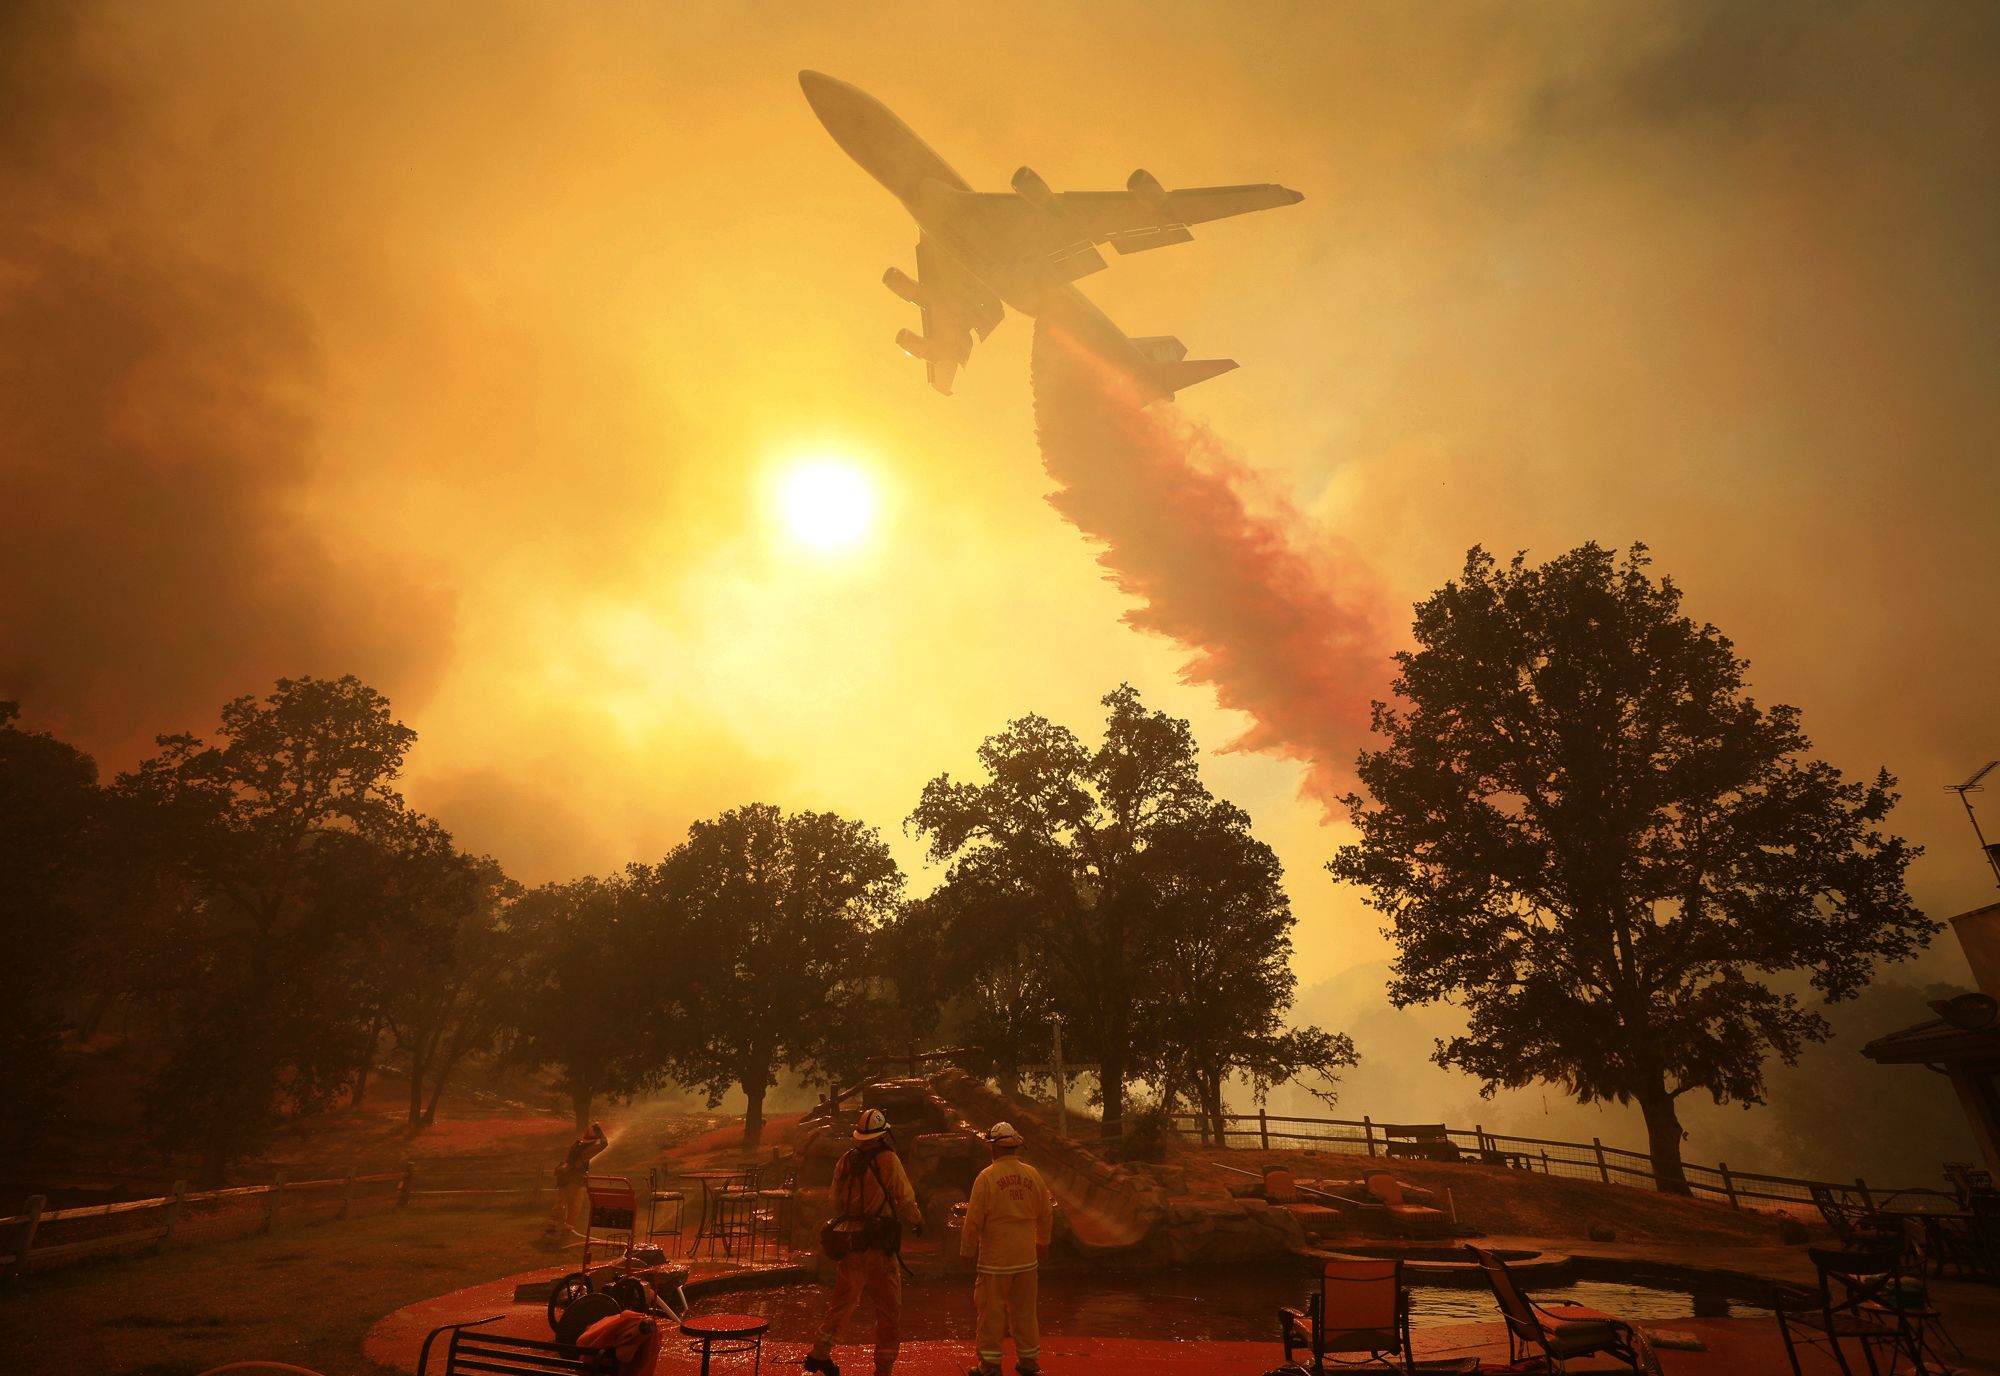 Boeing 747 firefighting in California, August 2018